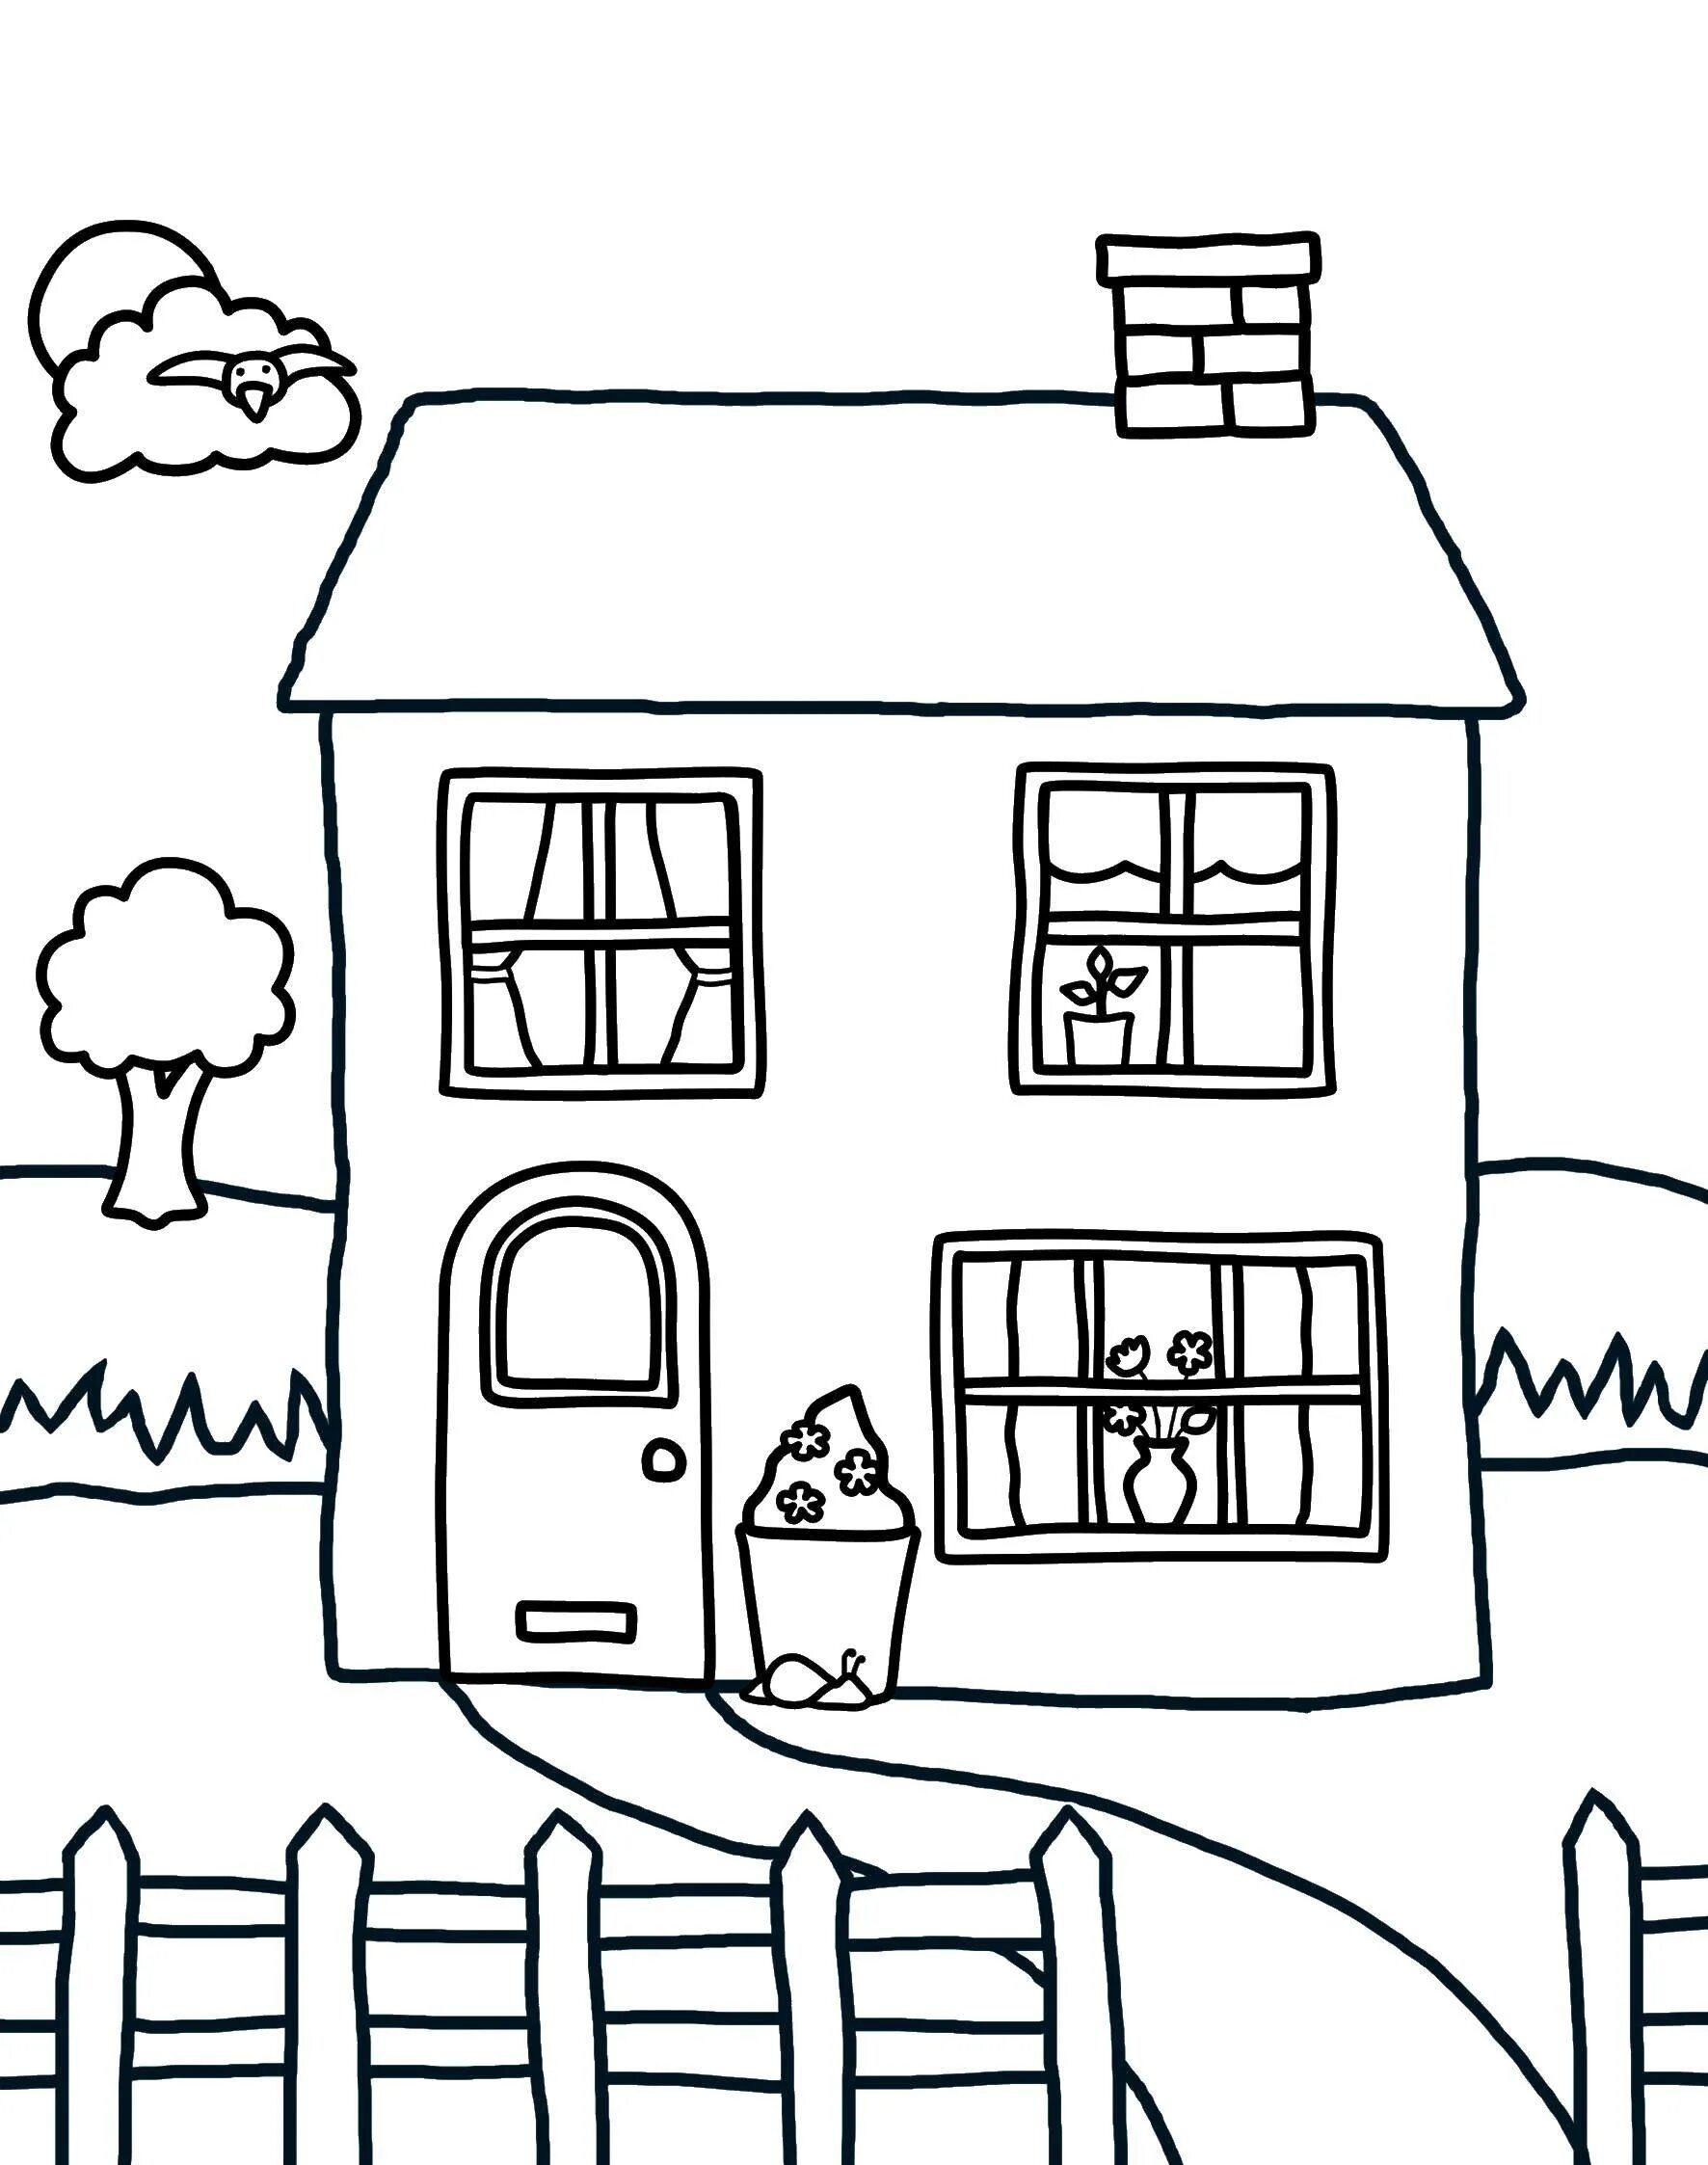 Fun house drawing sheet for children